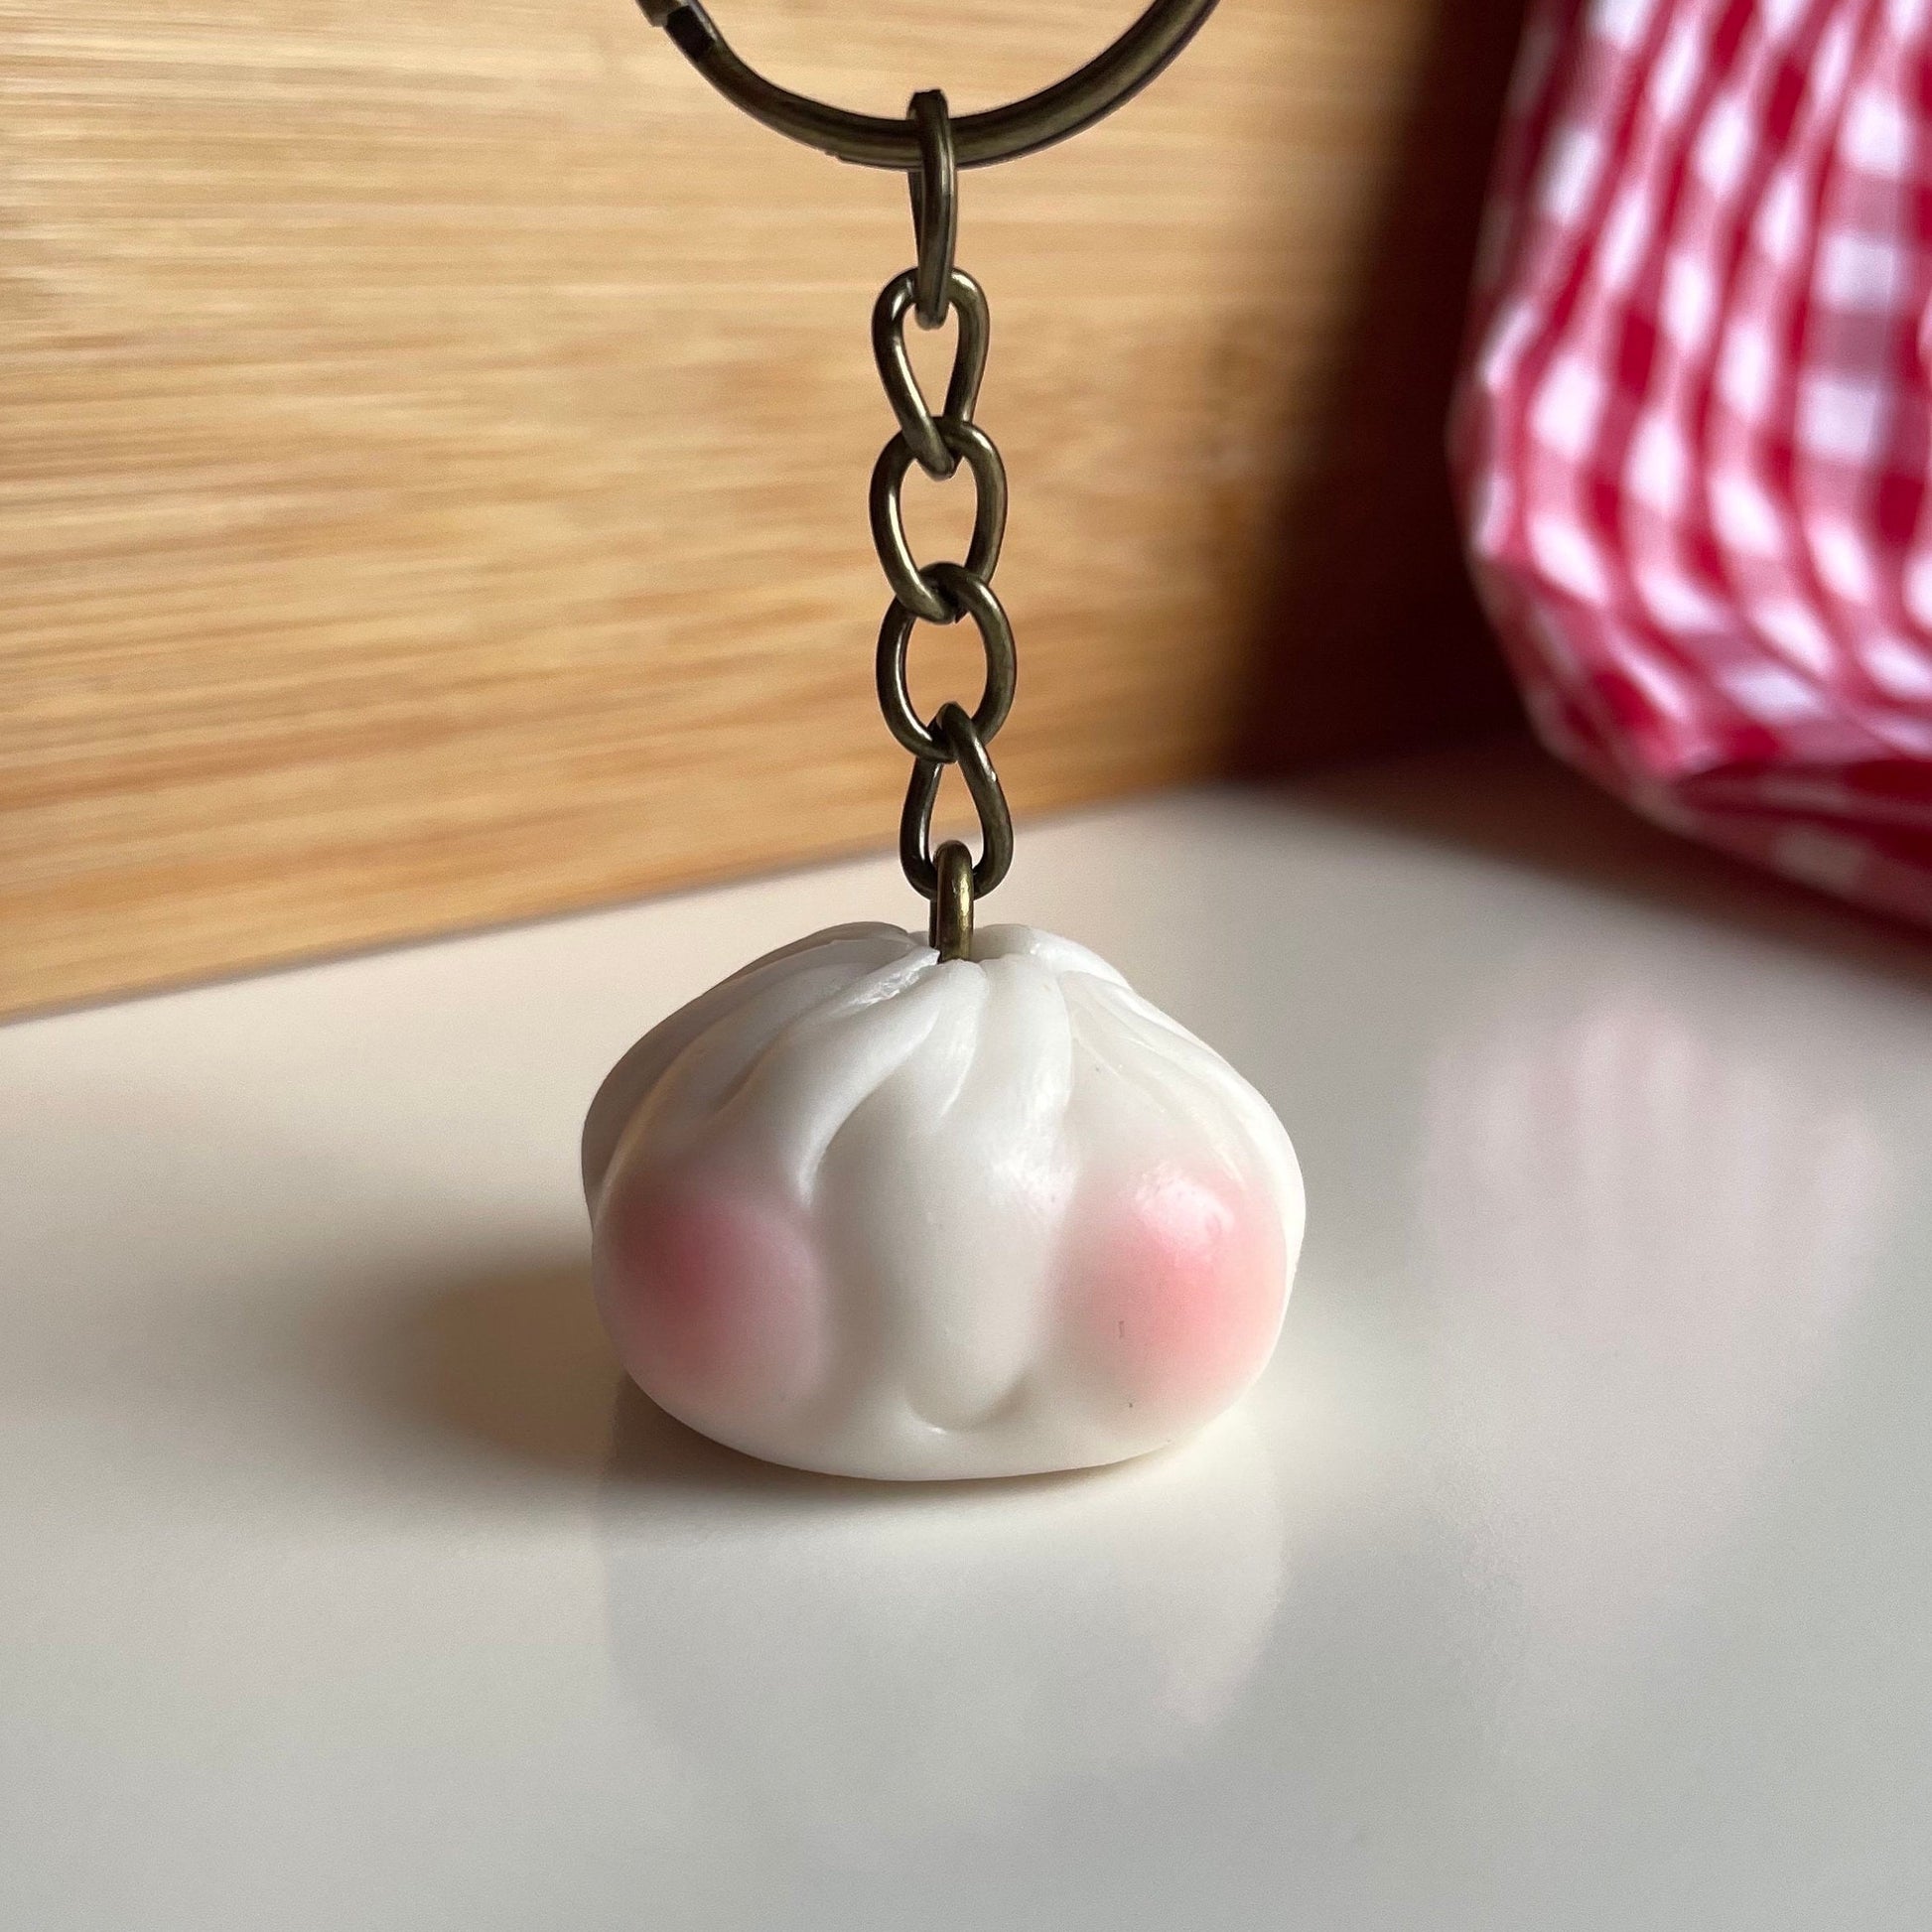 Cute dumpling keychain, bao charm, dumpling keyring, cute novelty keychain, polymerclay charm, clay keyring, realistic food, miniature food